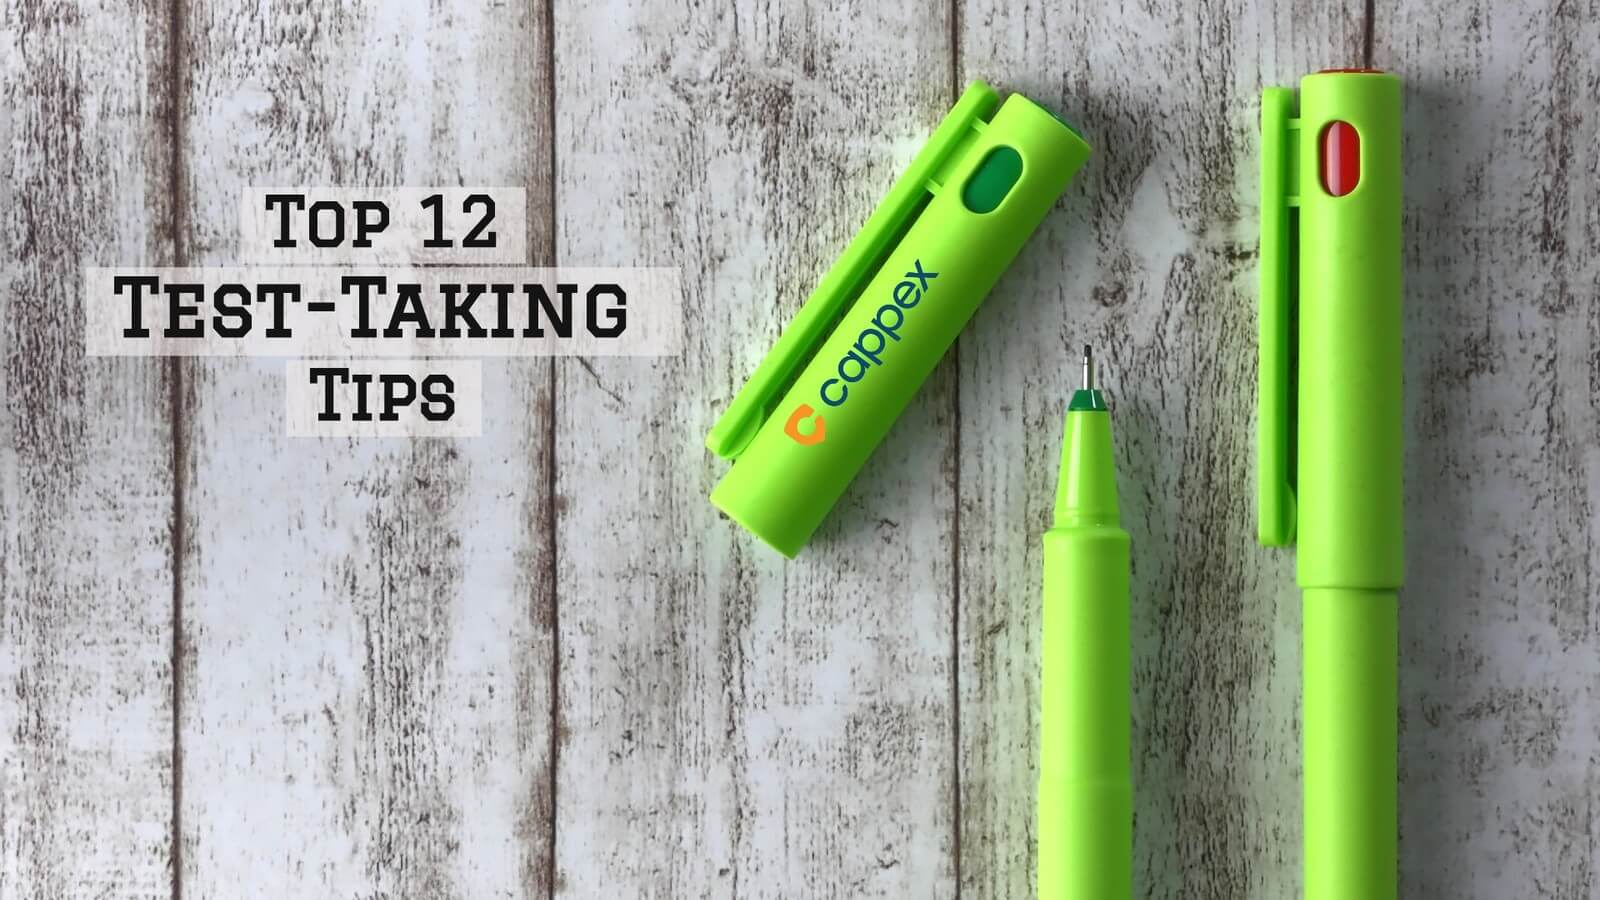 Top 12 Test-Taking Tips